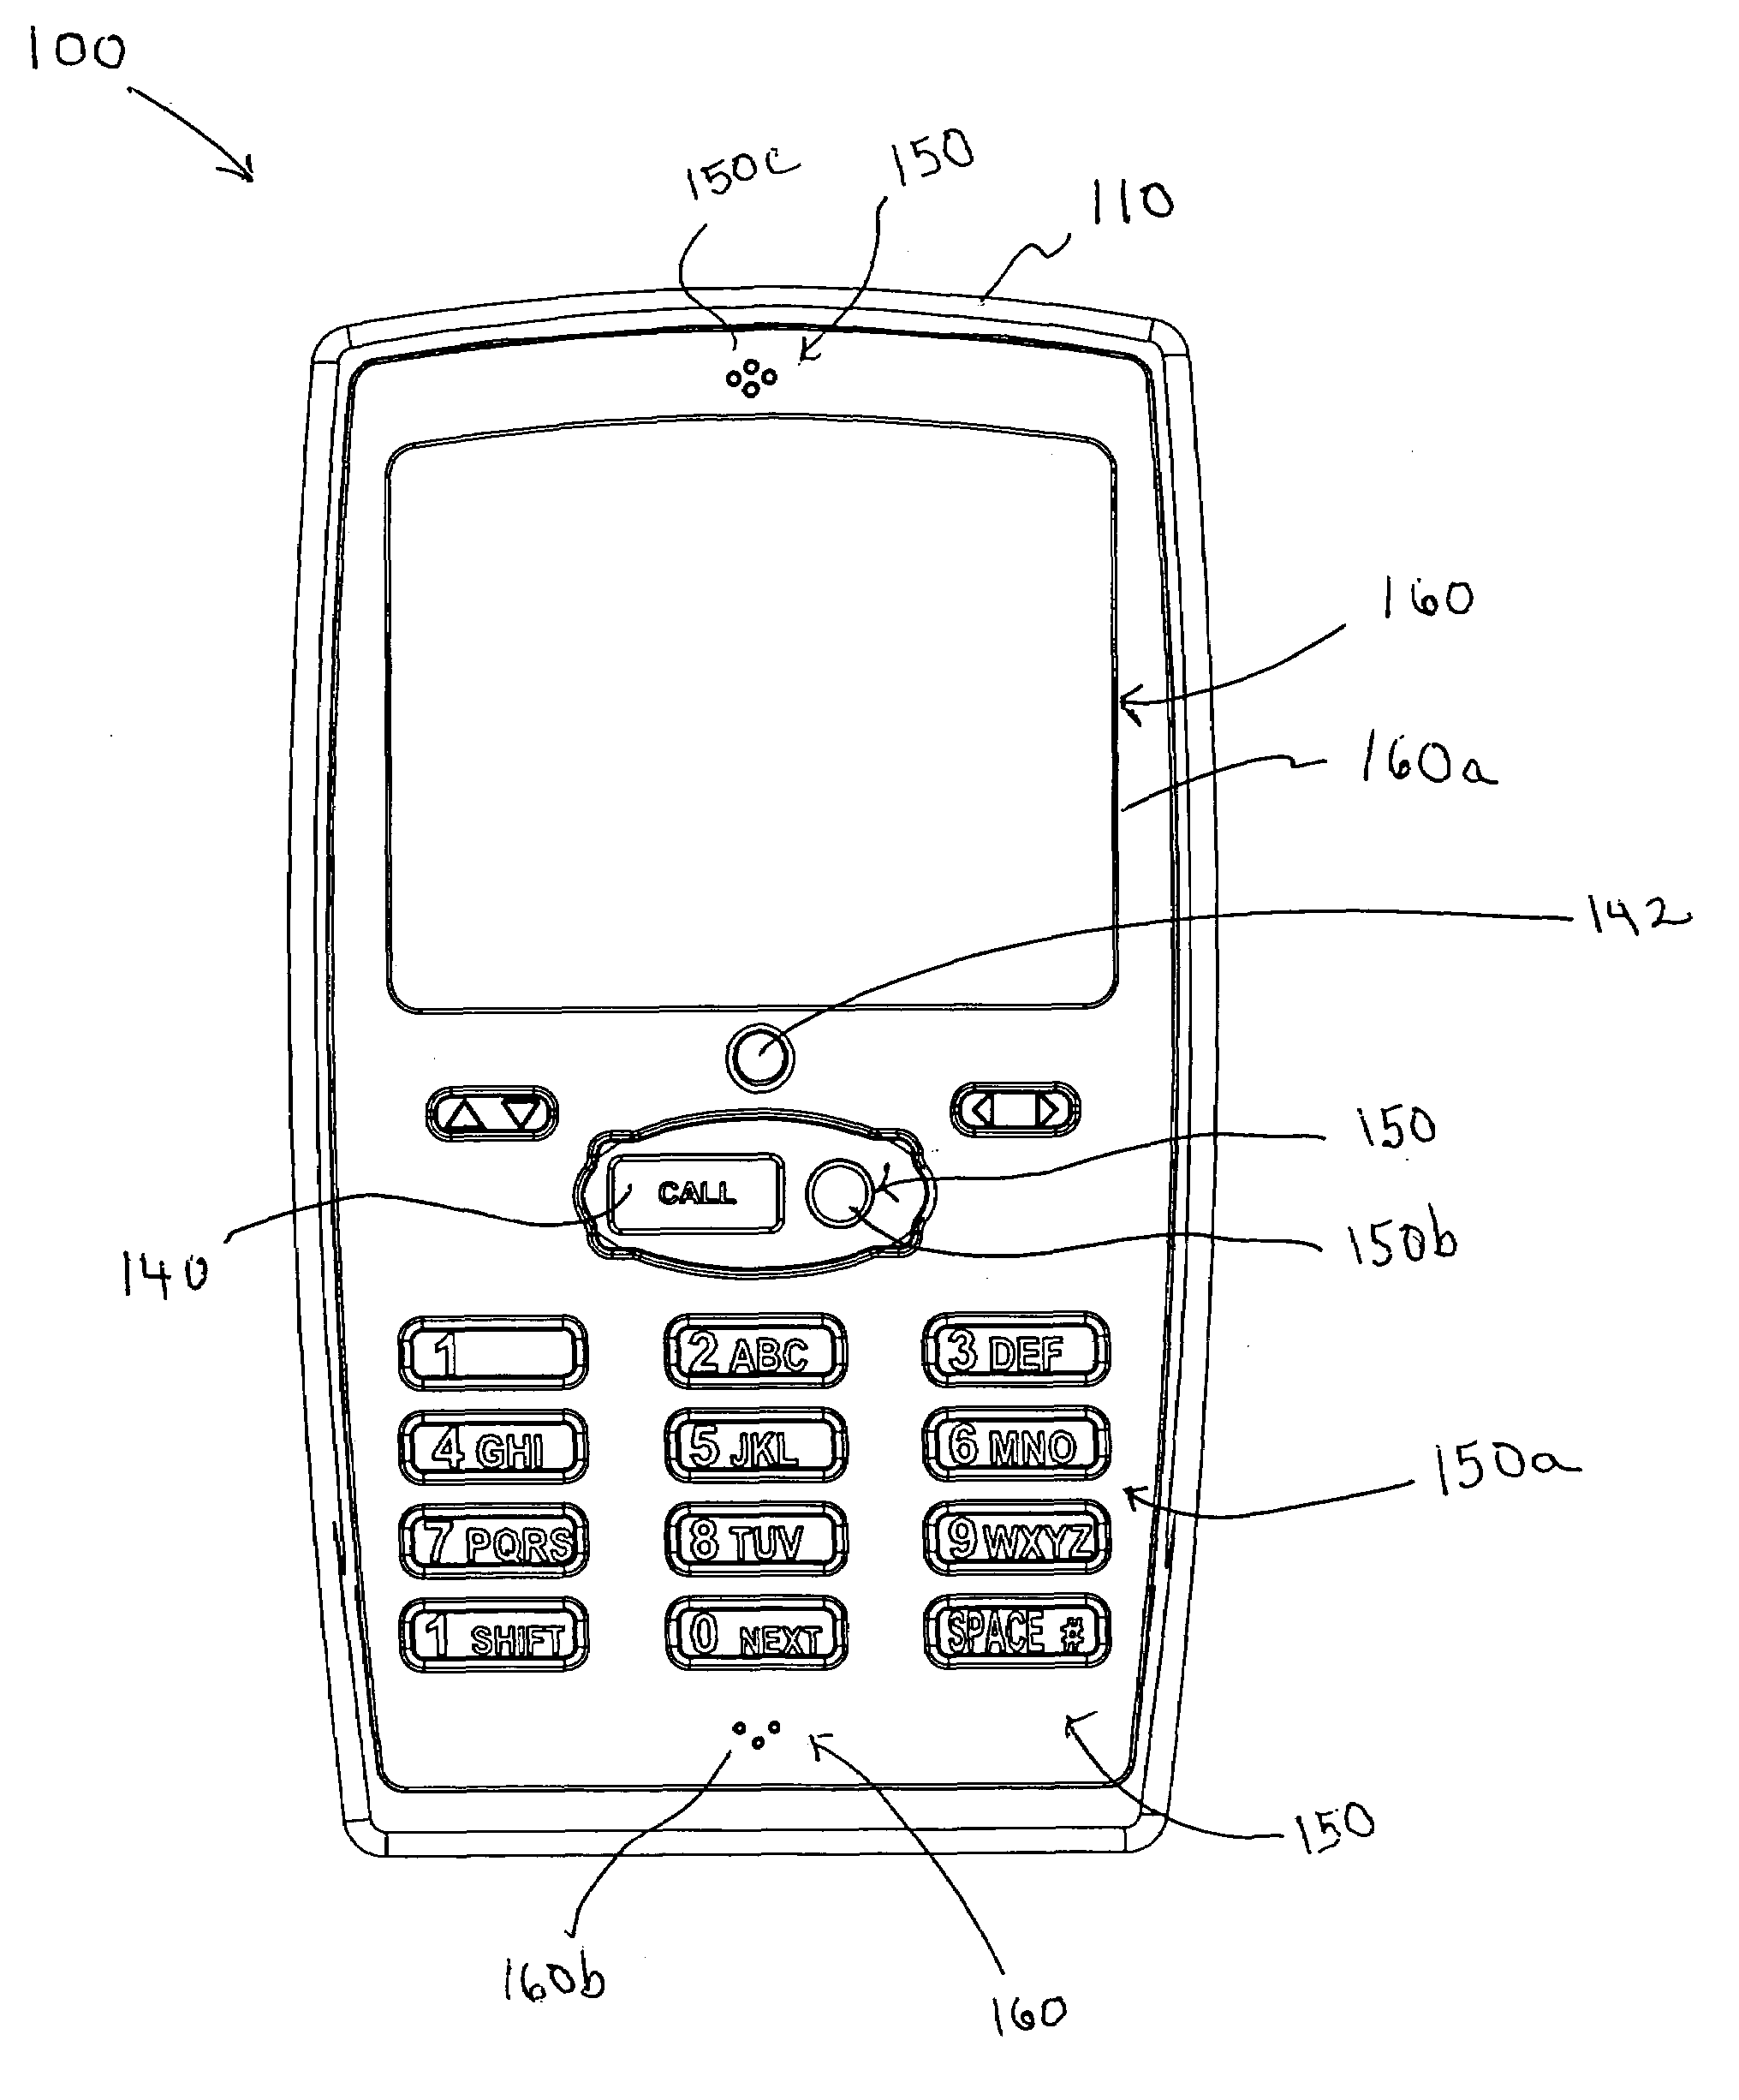 Communications device